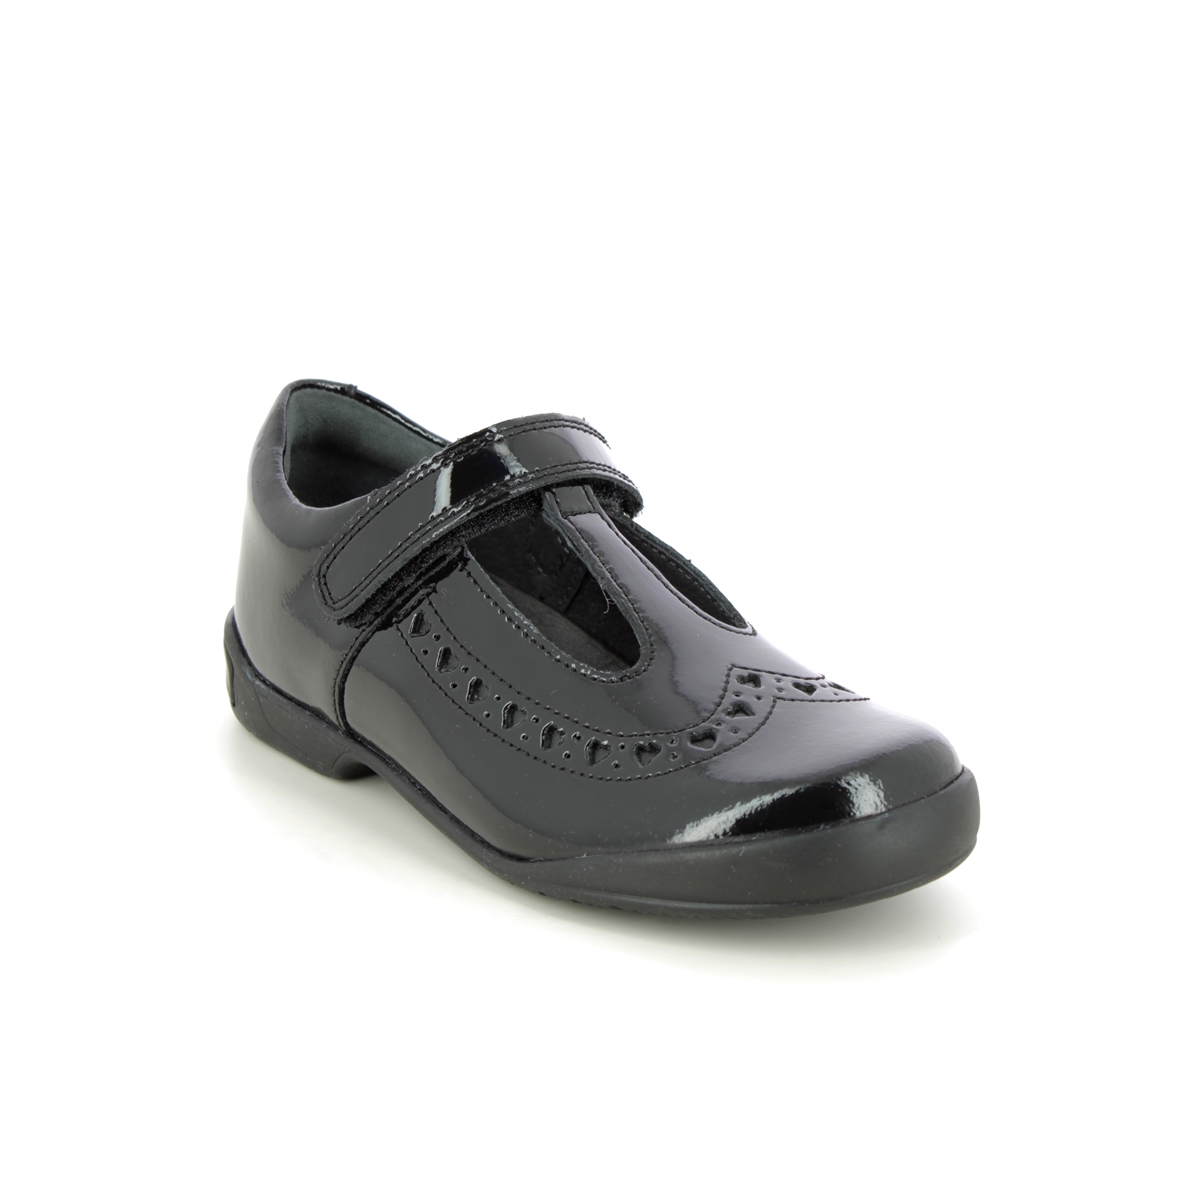 Start Rite - Leapfrog In Black Patent 2789-36F In Size 2 In Plain Black Patent For School Girls Shoes  In Black Patent For kids